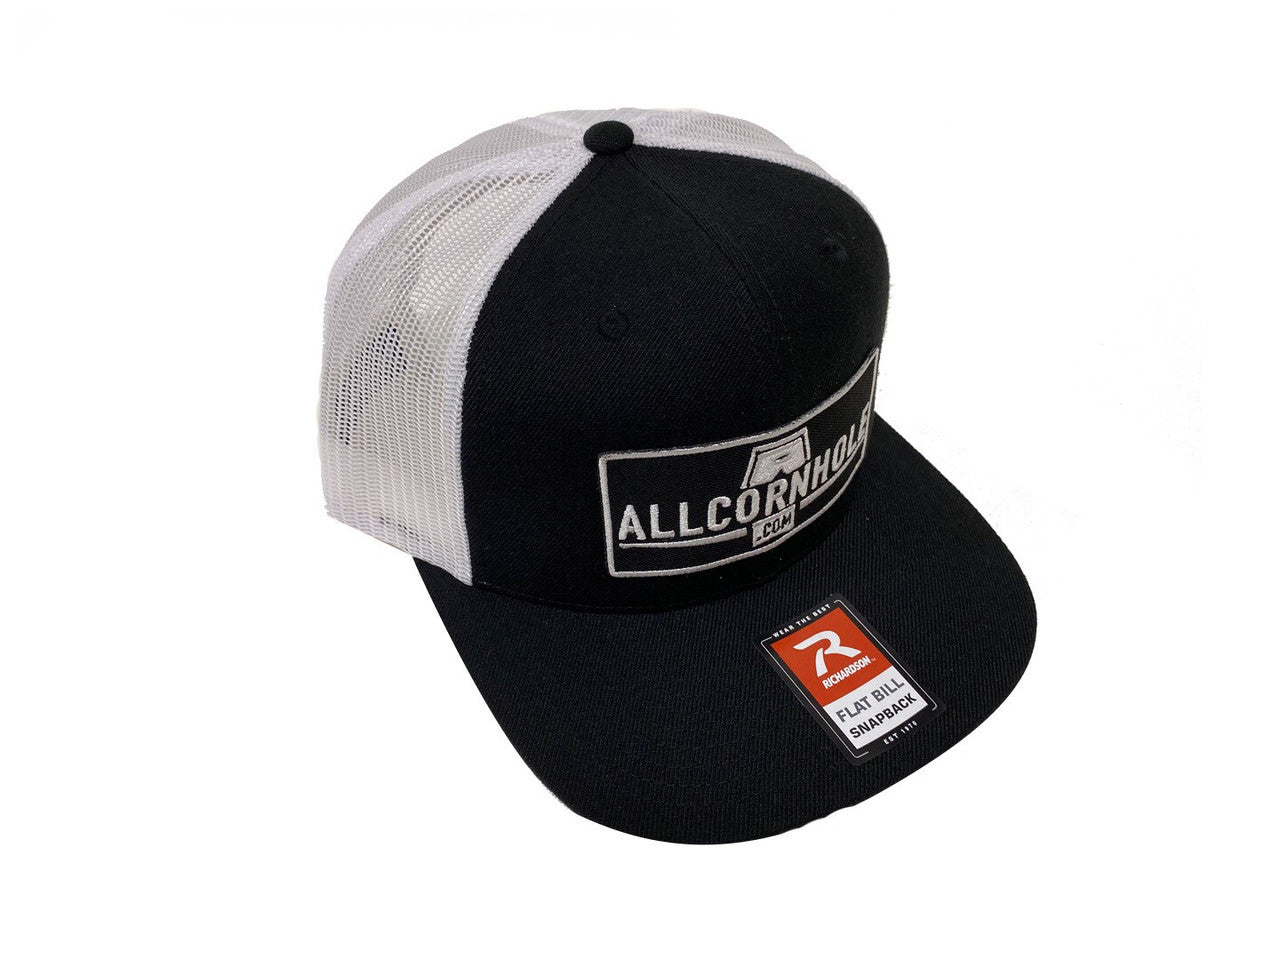 AllCornhole Flat Bill Black/White Snapback Hat with patch - Free Shipping